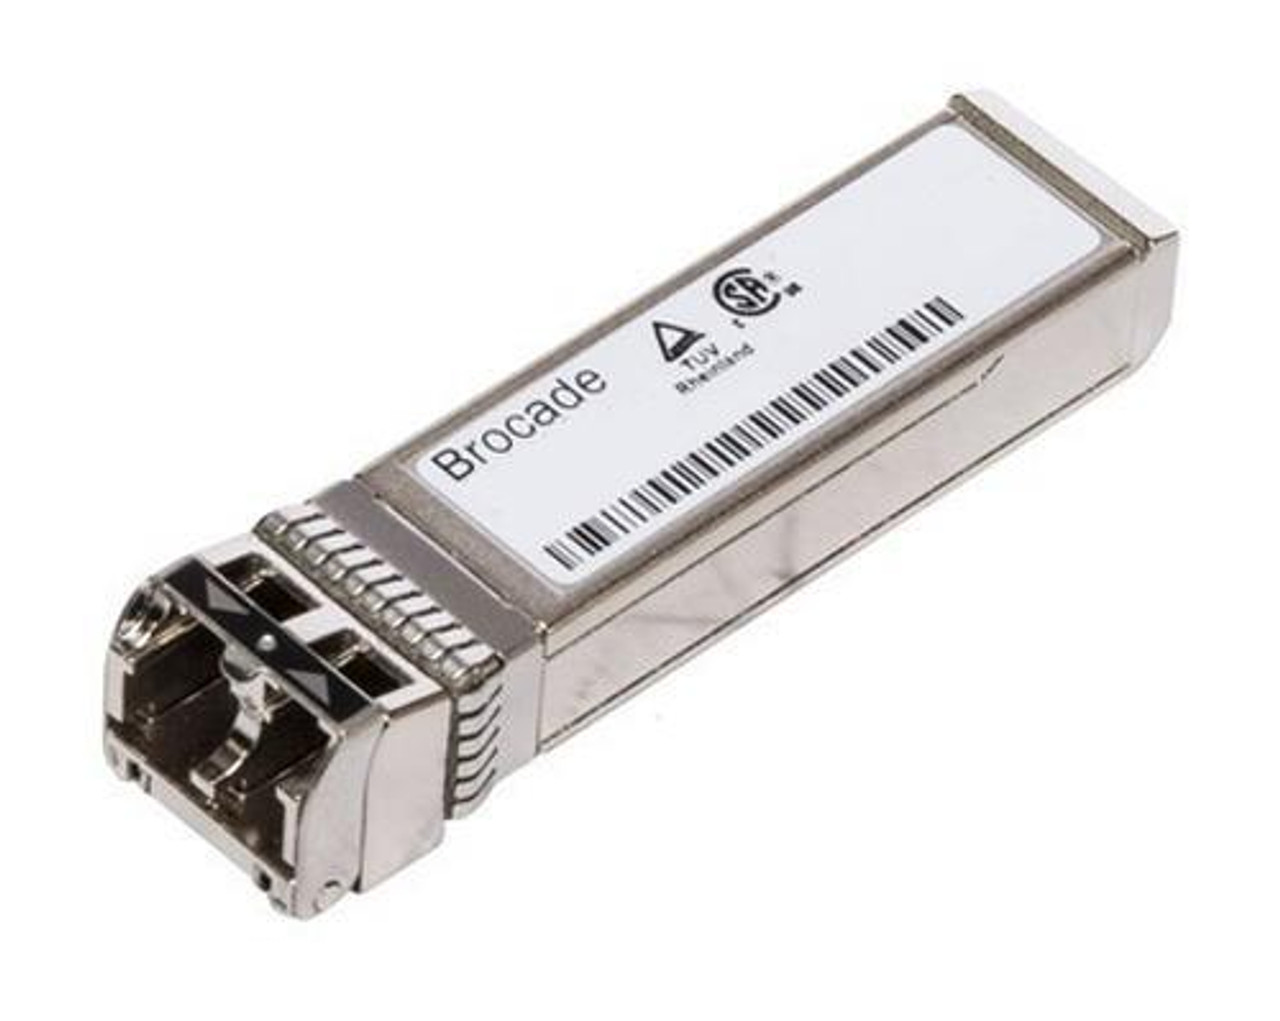 XBR-000140 Brocade 2Gb Fibre Channel CWDM SFP (mini-GBIC) Module 1 x Fiber Channel SFP (mini-GBIC)